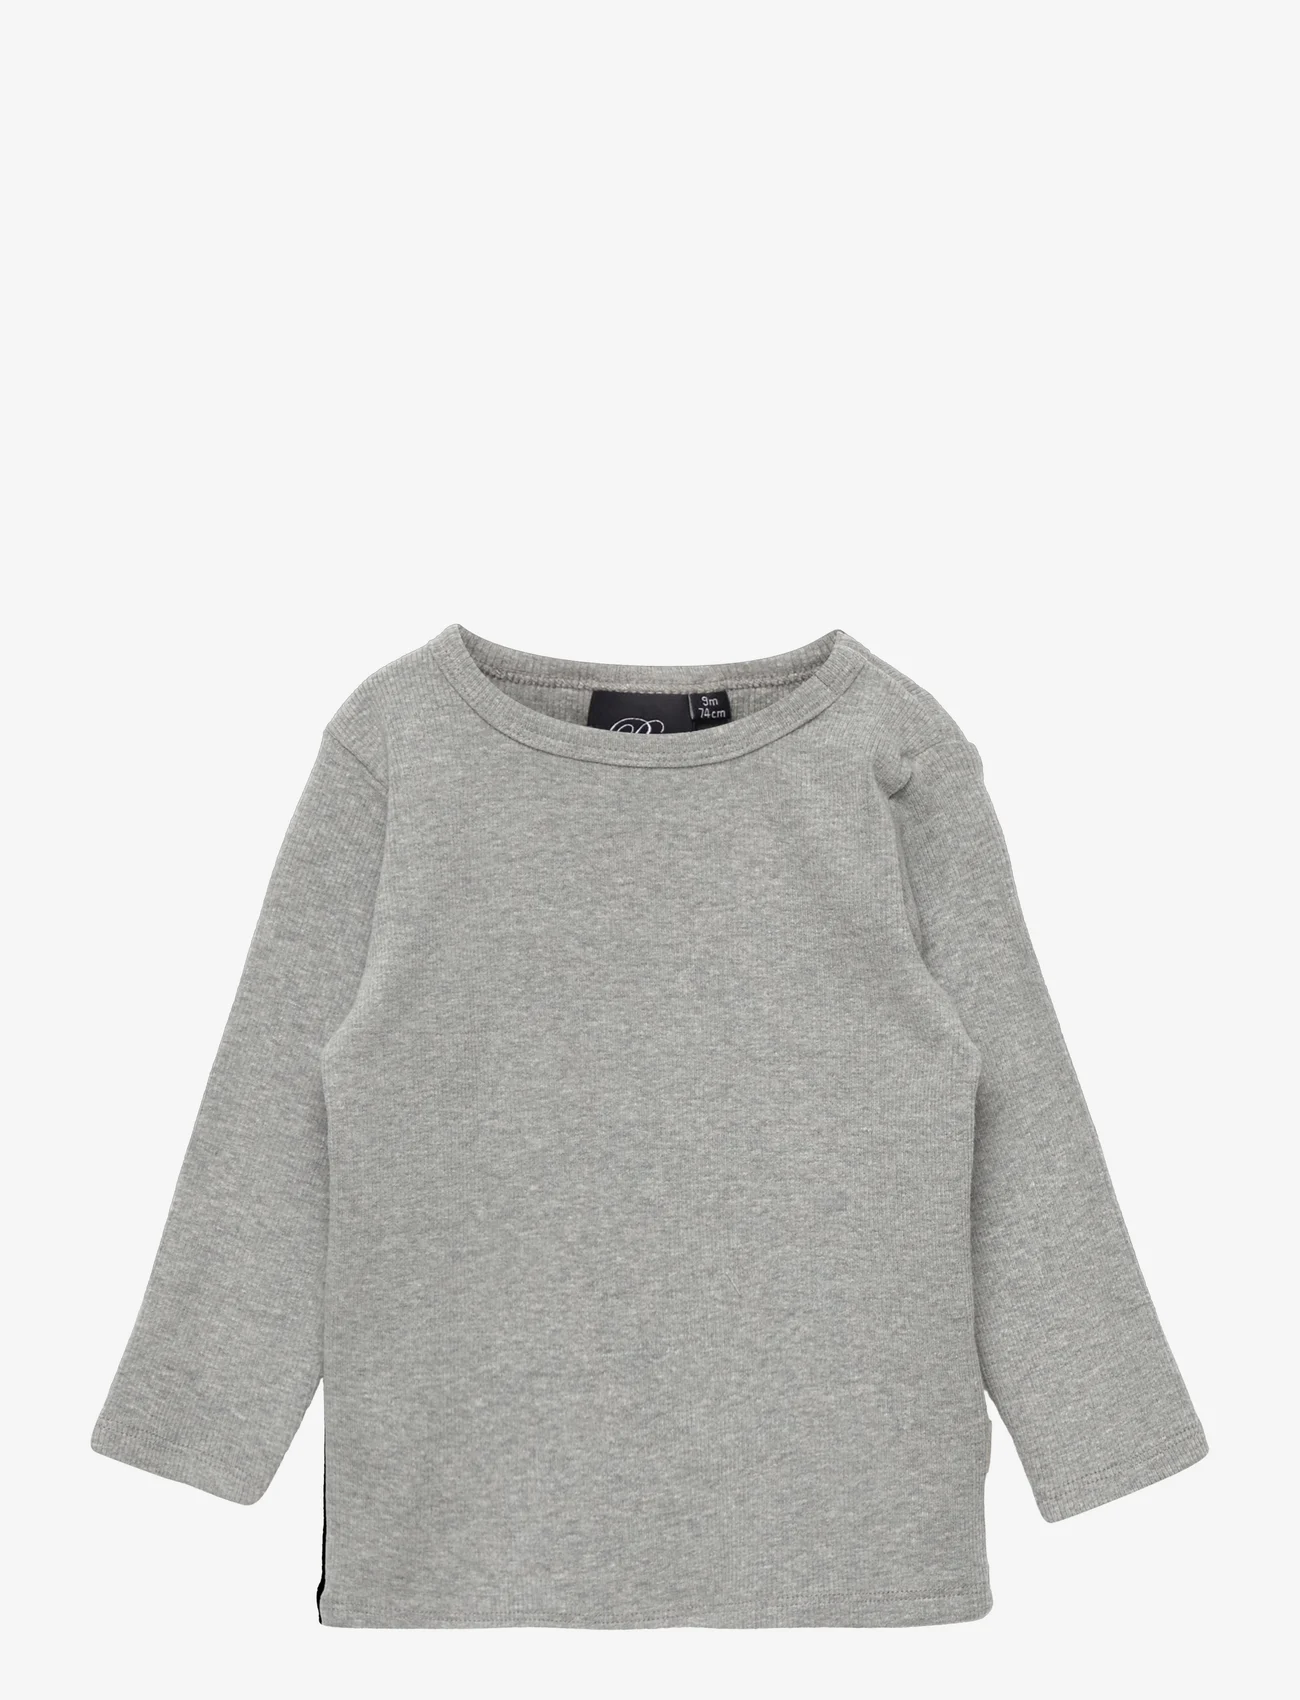 Sofie Schnoor Baby and Kids - T-shirt long-sleeve - marškinėliai ilgomis rankovėmis - grey melange - 0